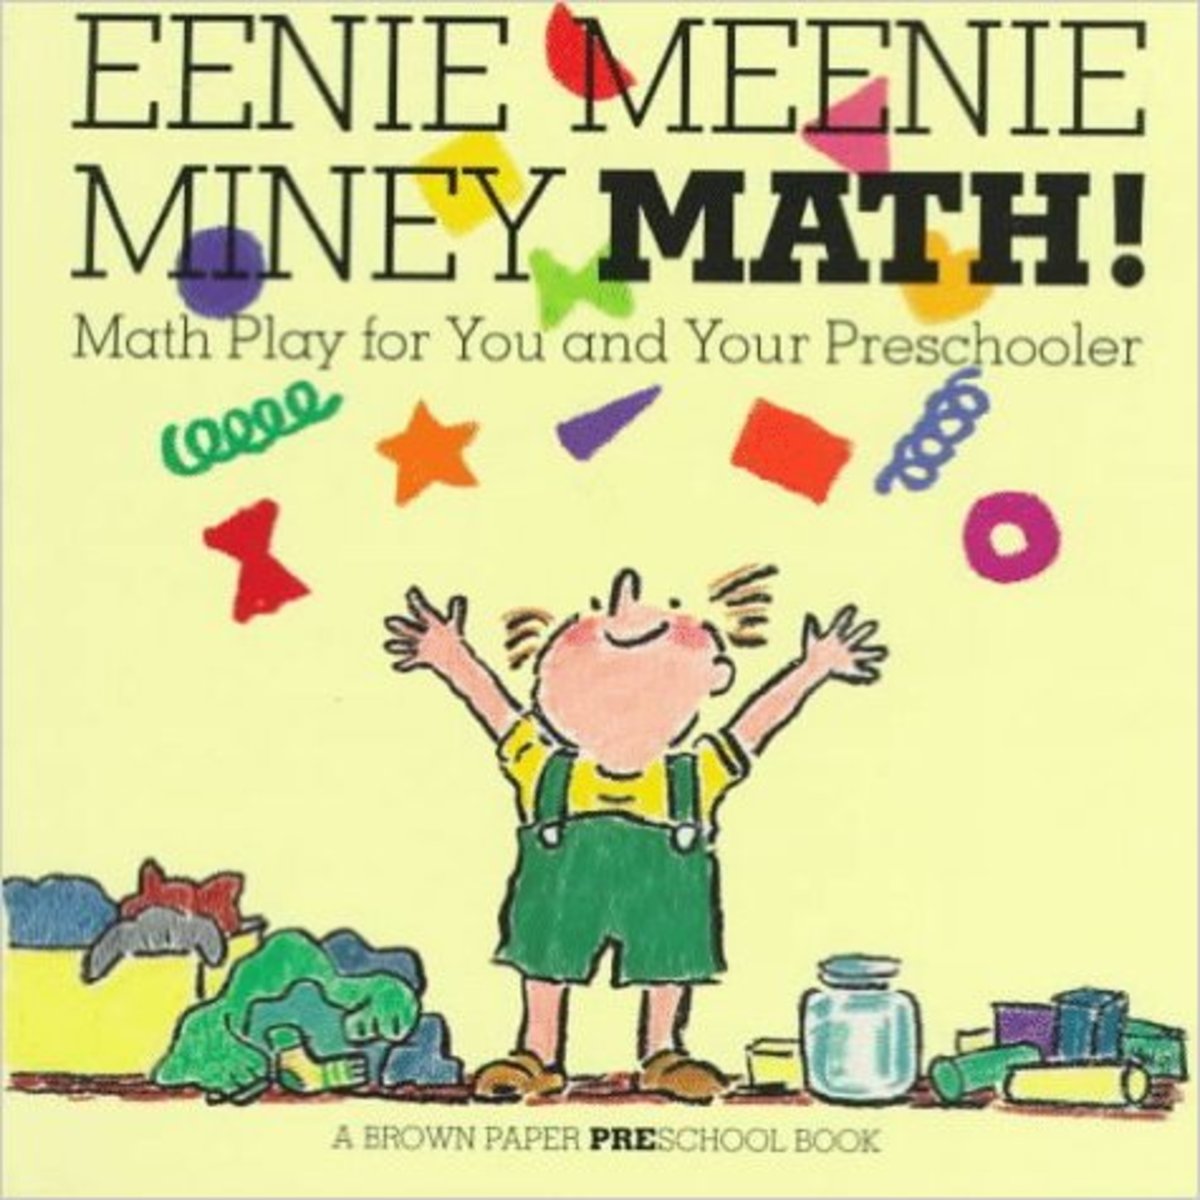 Eenie Meenie Miney Math!: Math Play for You and Your Preschooler (Brown Paper Preschool) by Linda Allison 